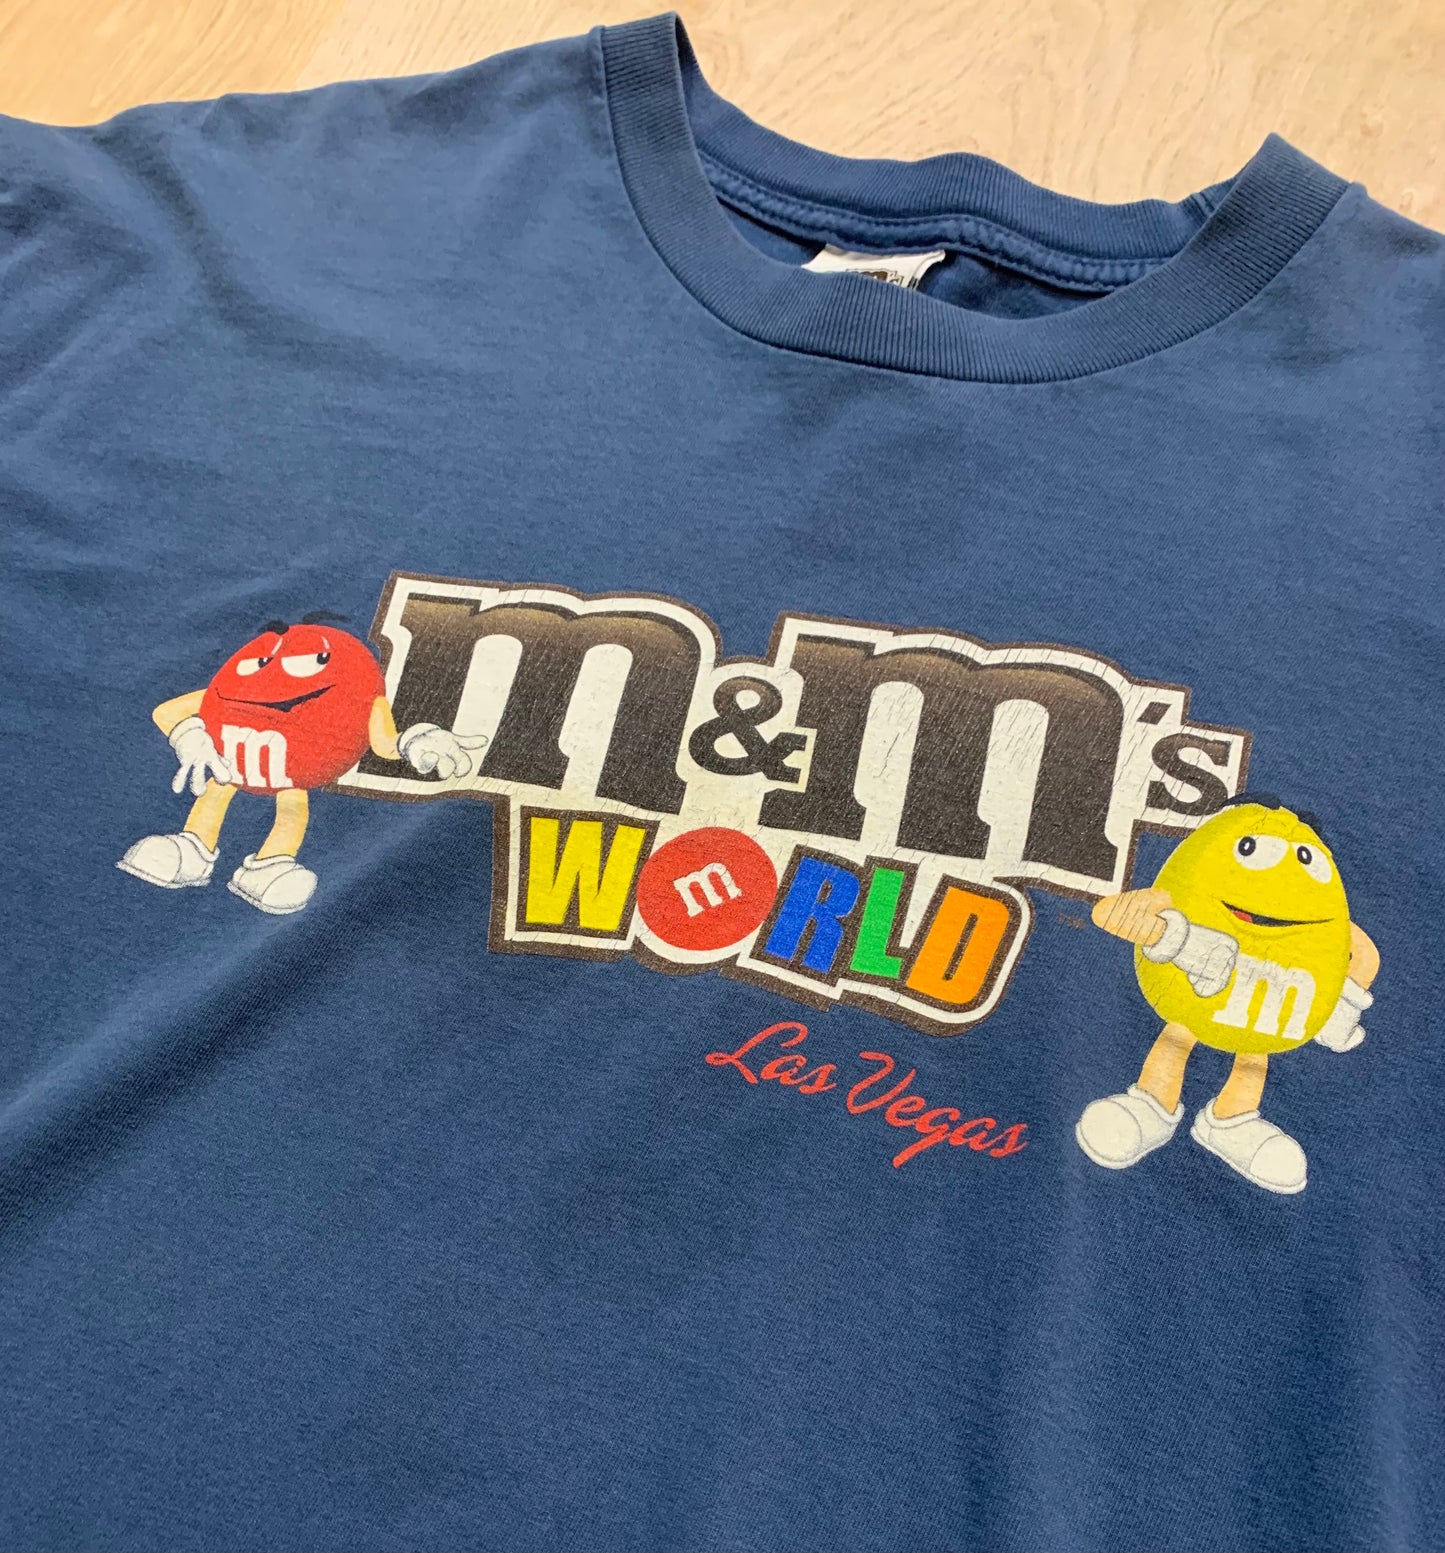 Vintage M&M World Las Vegas Single Stitch T-Shirt